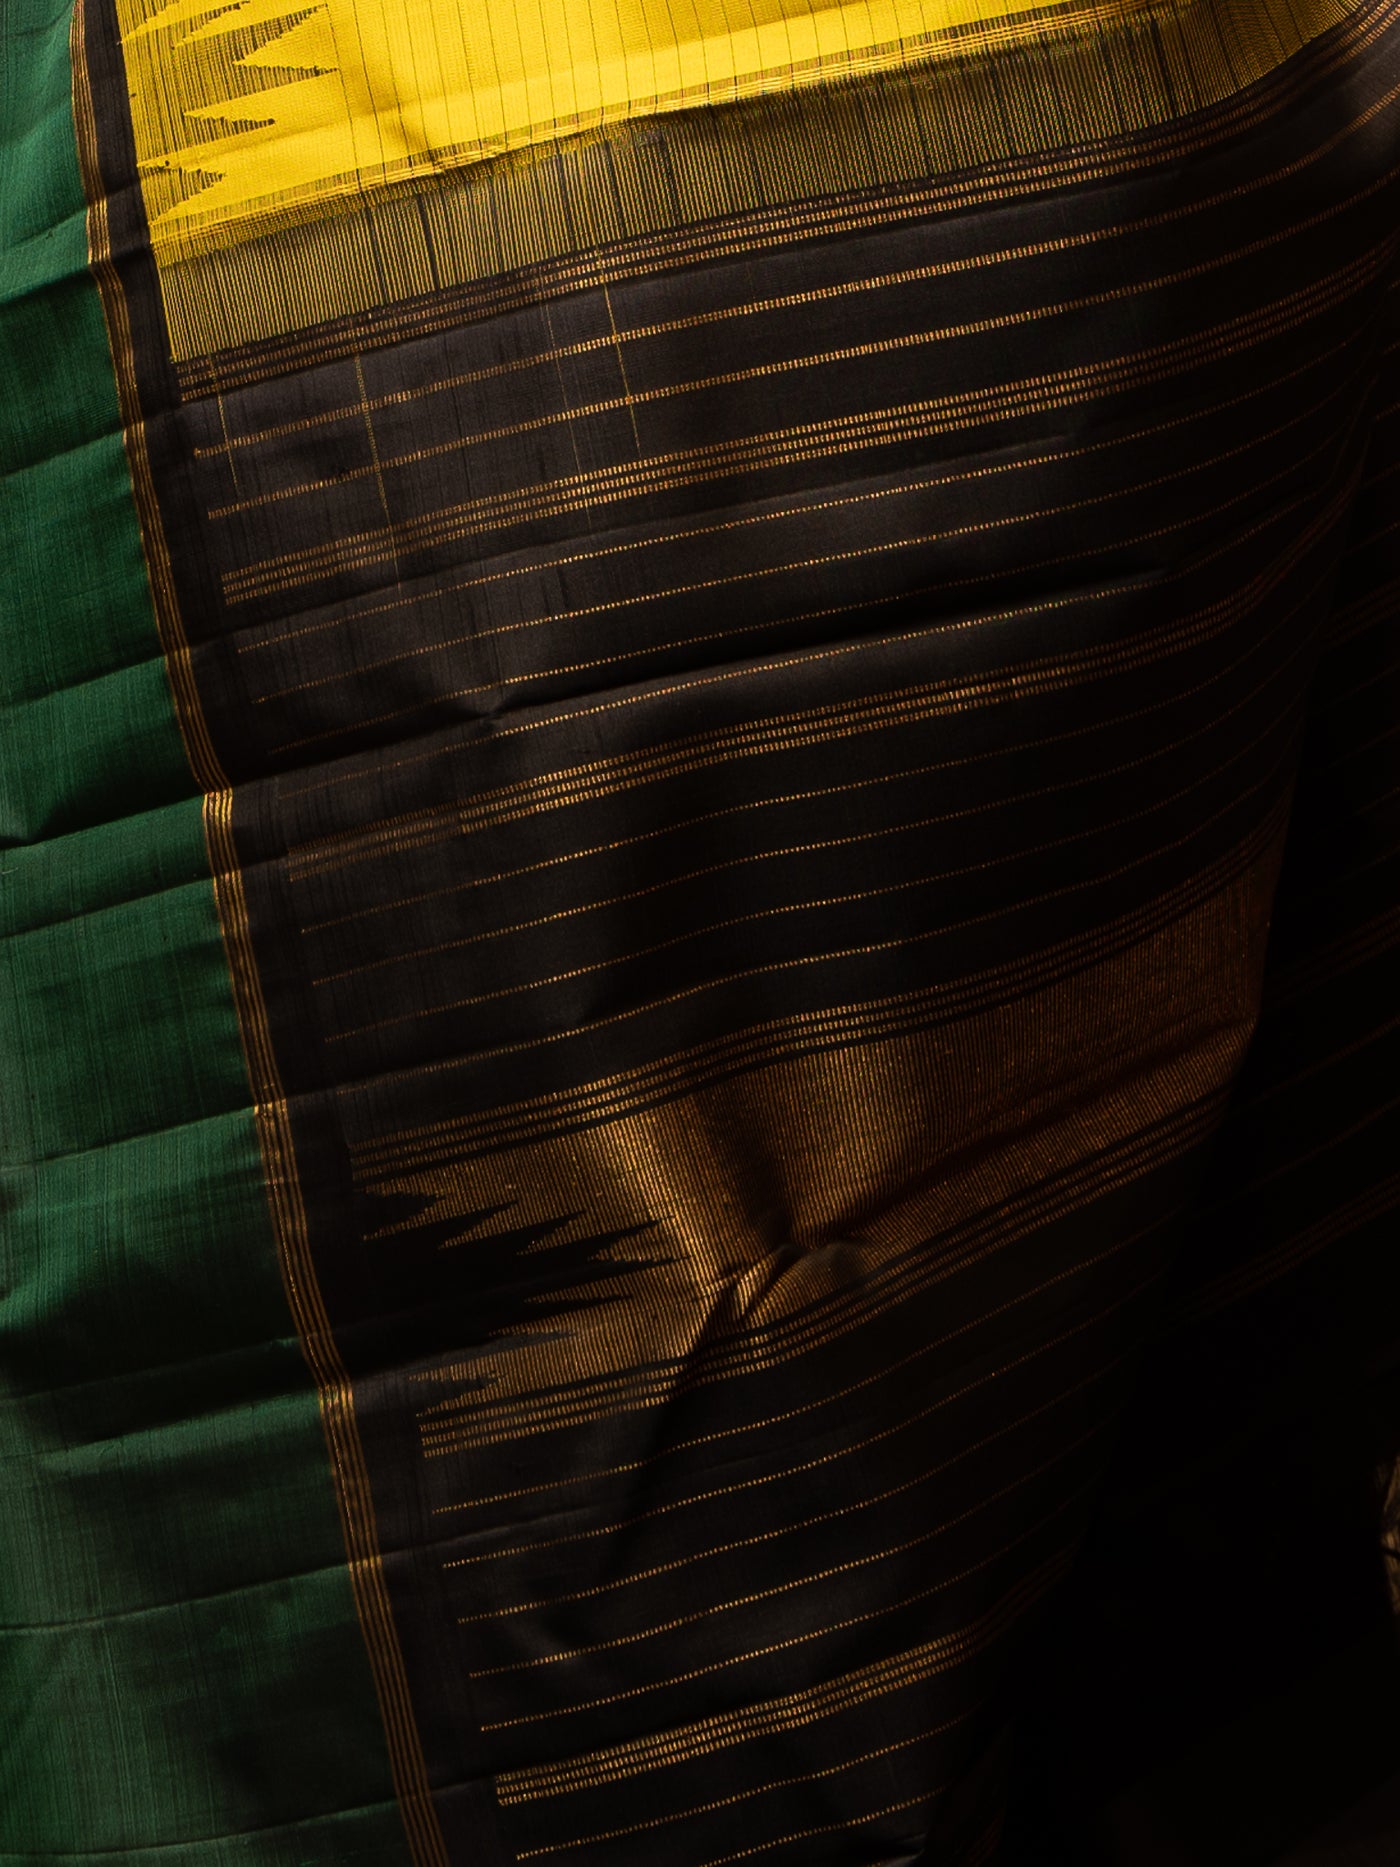 Yellow and Bottle Green Stripes Pure Kanchipuram Silk Sari - Clio Silks